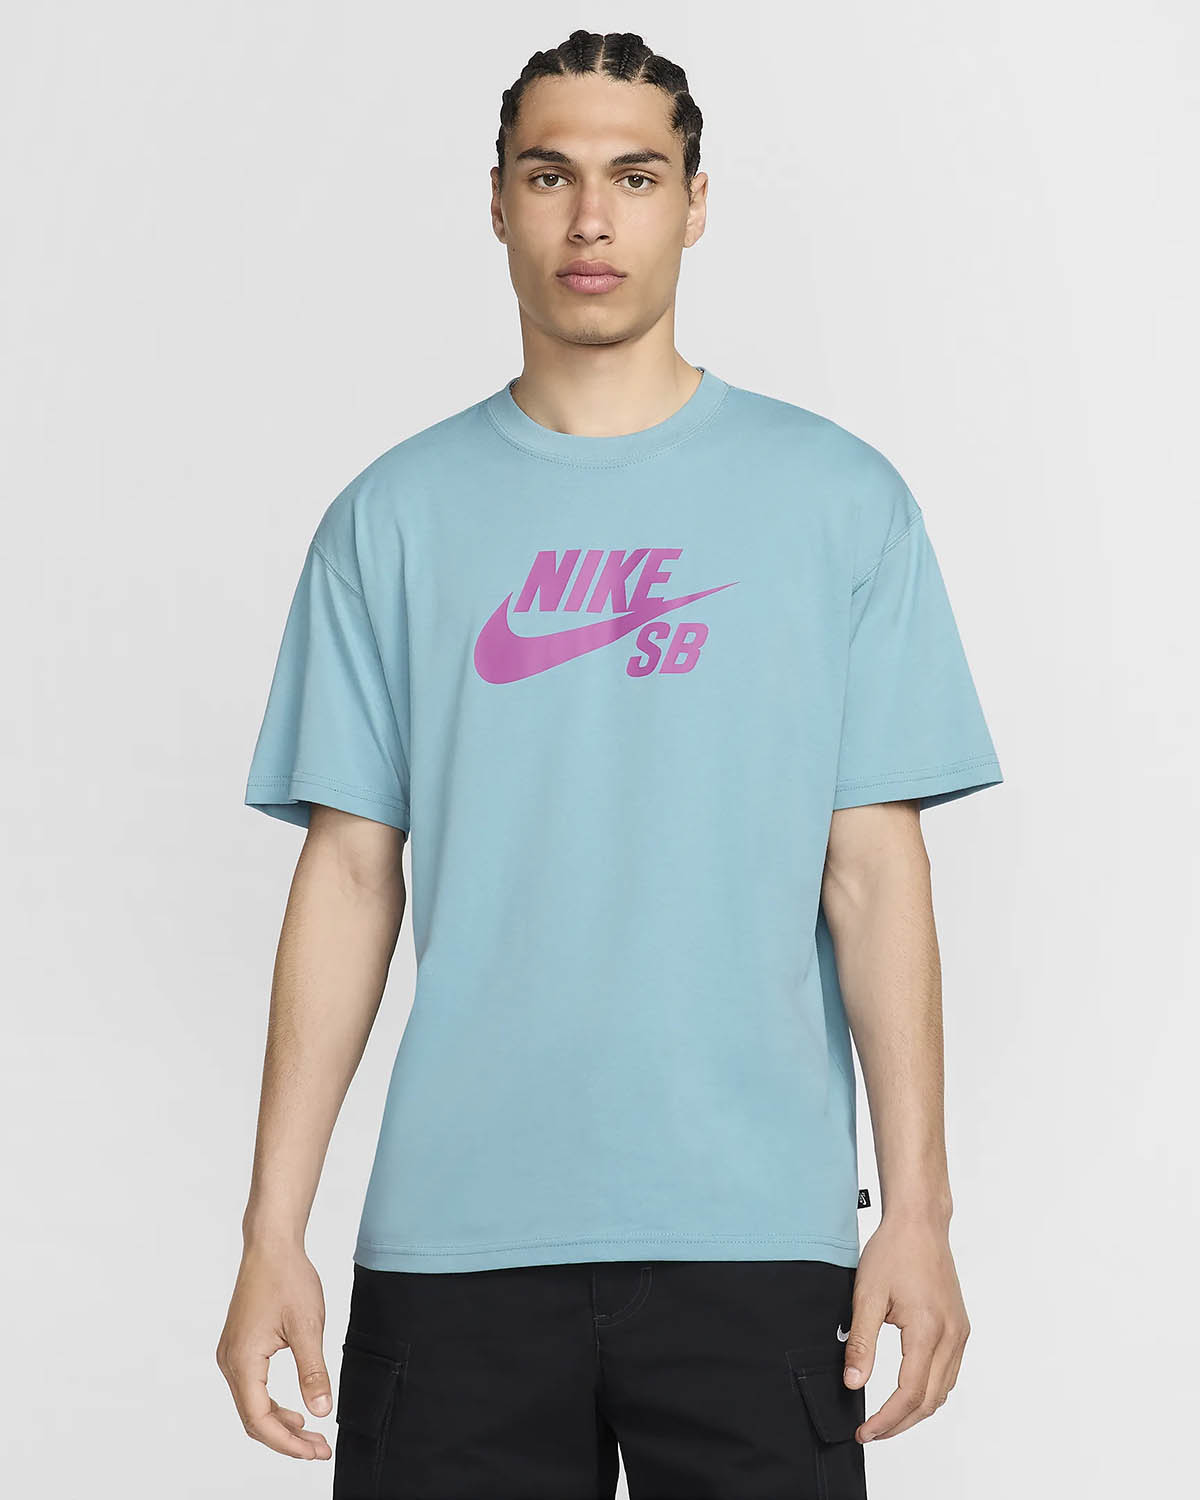 Nike SB T Shirt Denim Turquoise